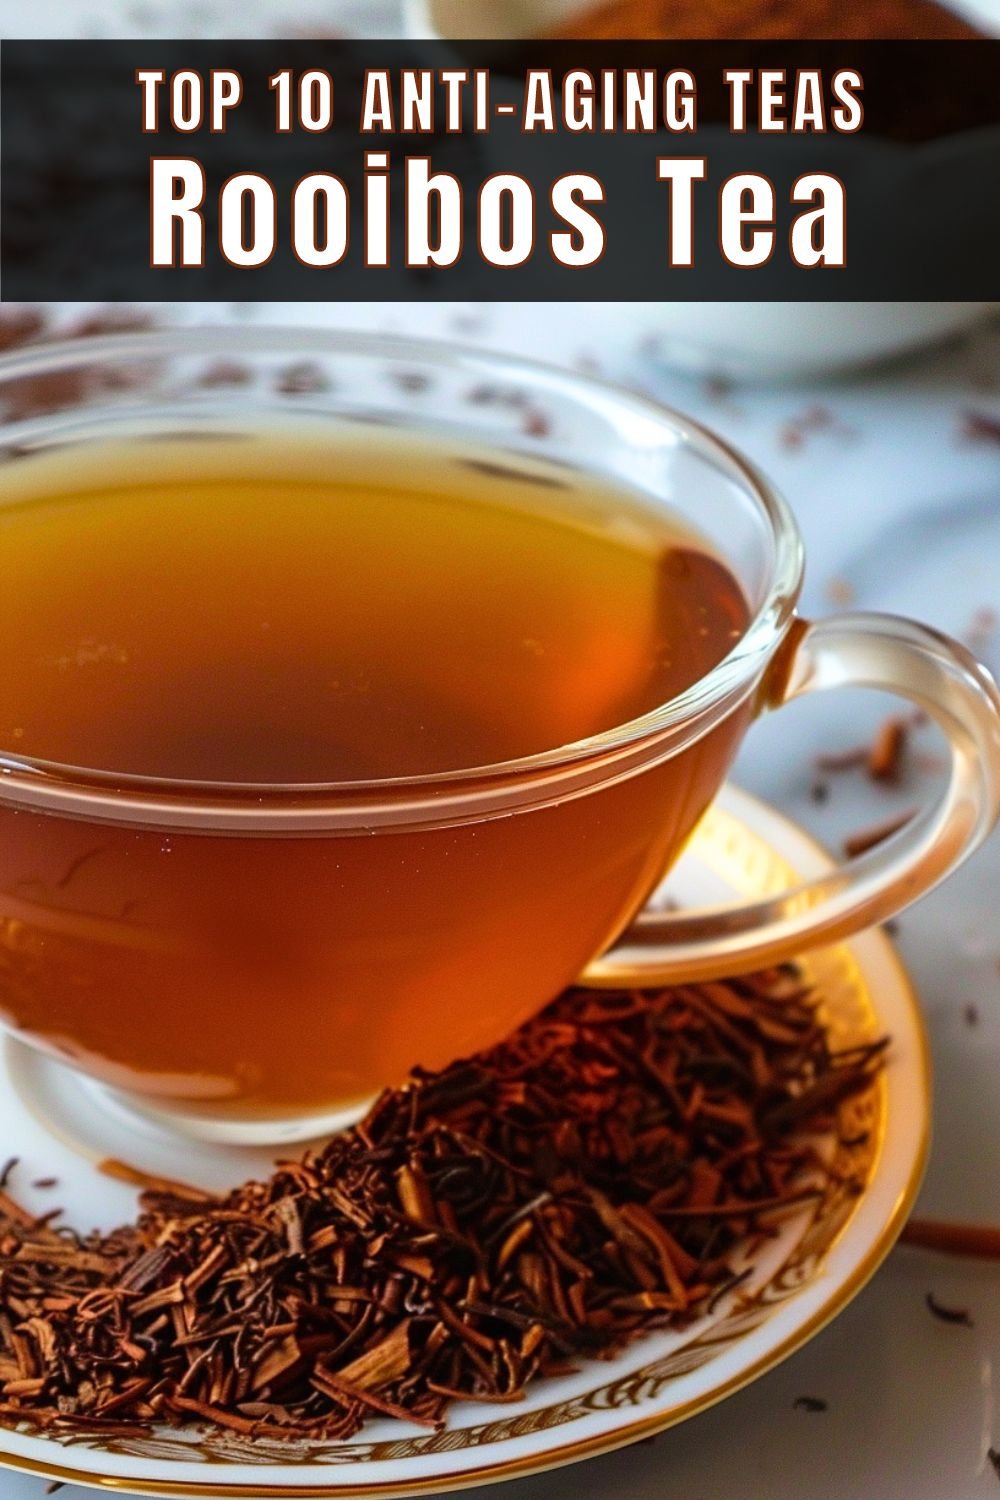 Top 10 Anti-Aging Teas Rooibos Tea